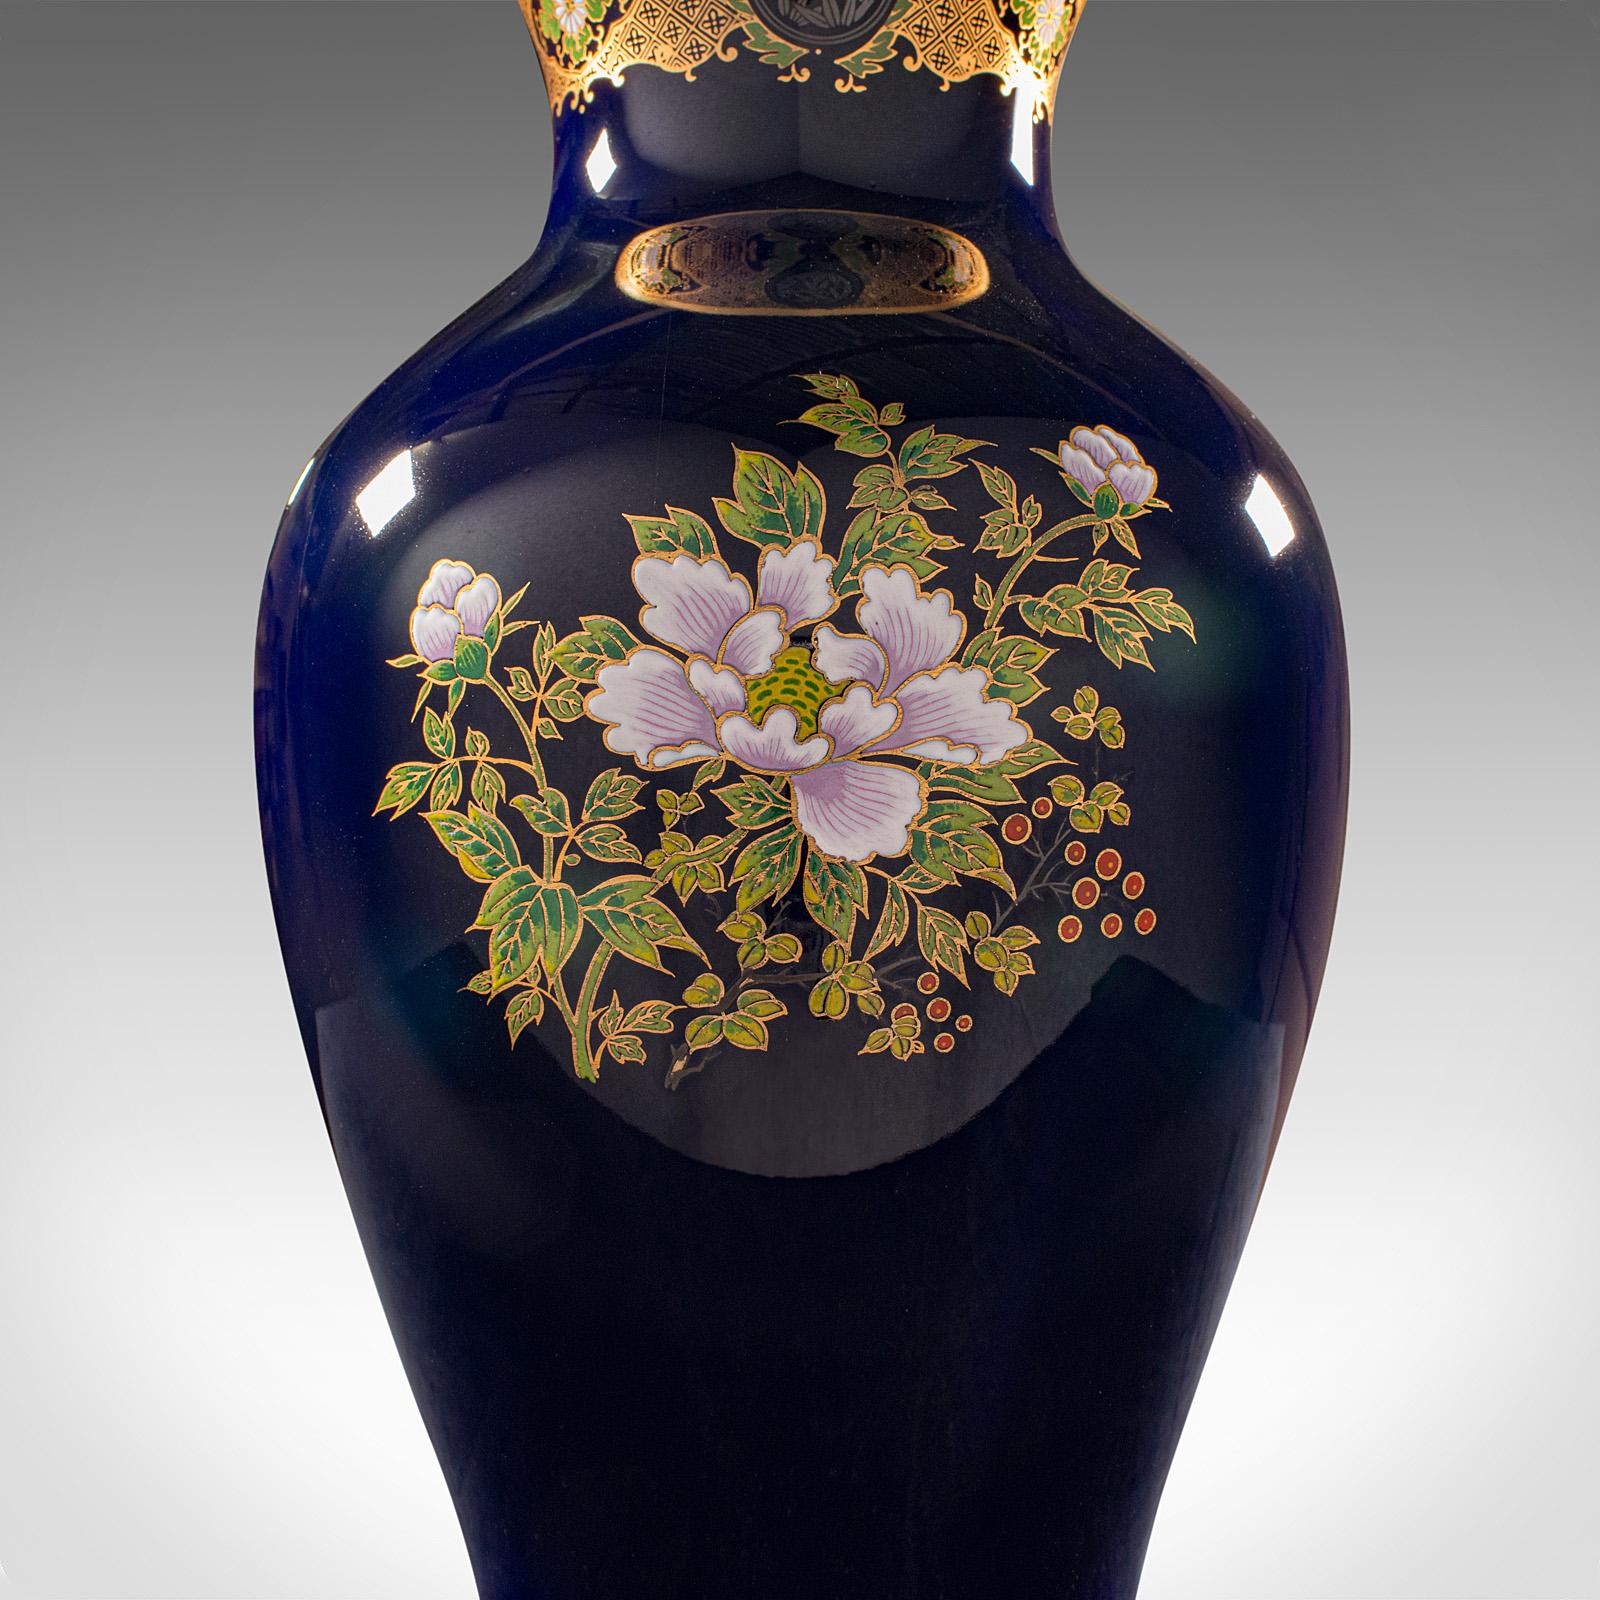 Vintage Golden Pheasant Vase, Chinese, Lacquer Ceramic Baluster Urn, Flower Pot  For Sale 4